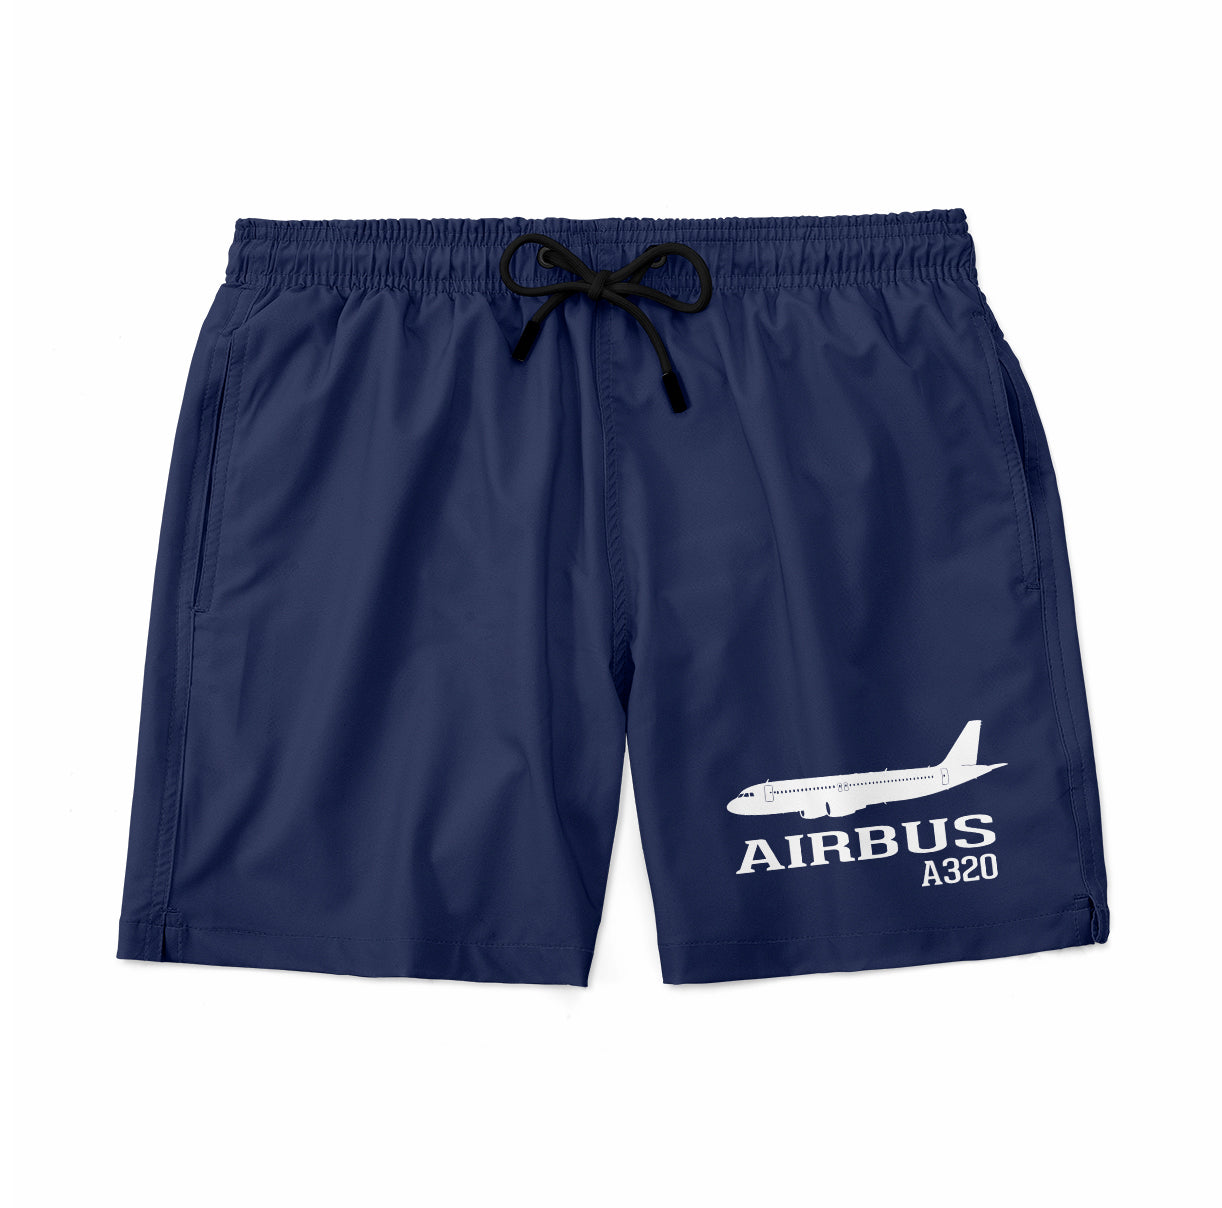 Airbus A320 Printed & Designed Swim Trunks & Shorts